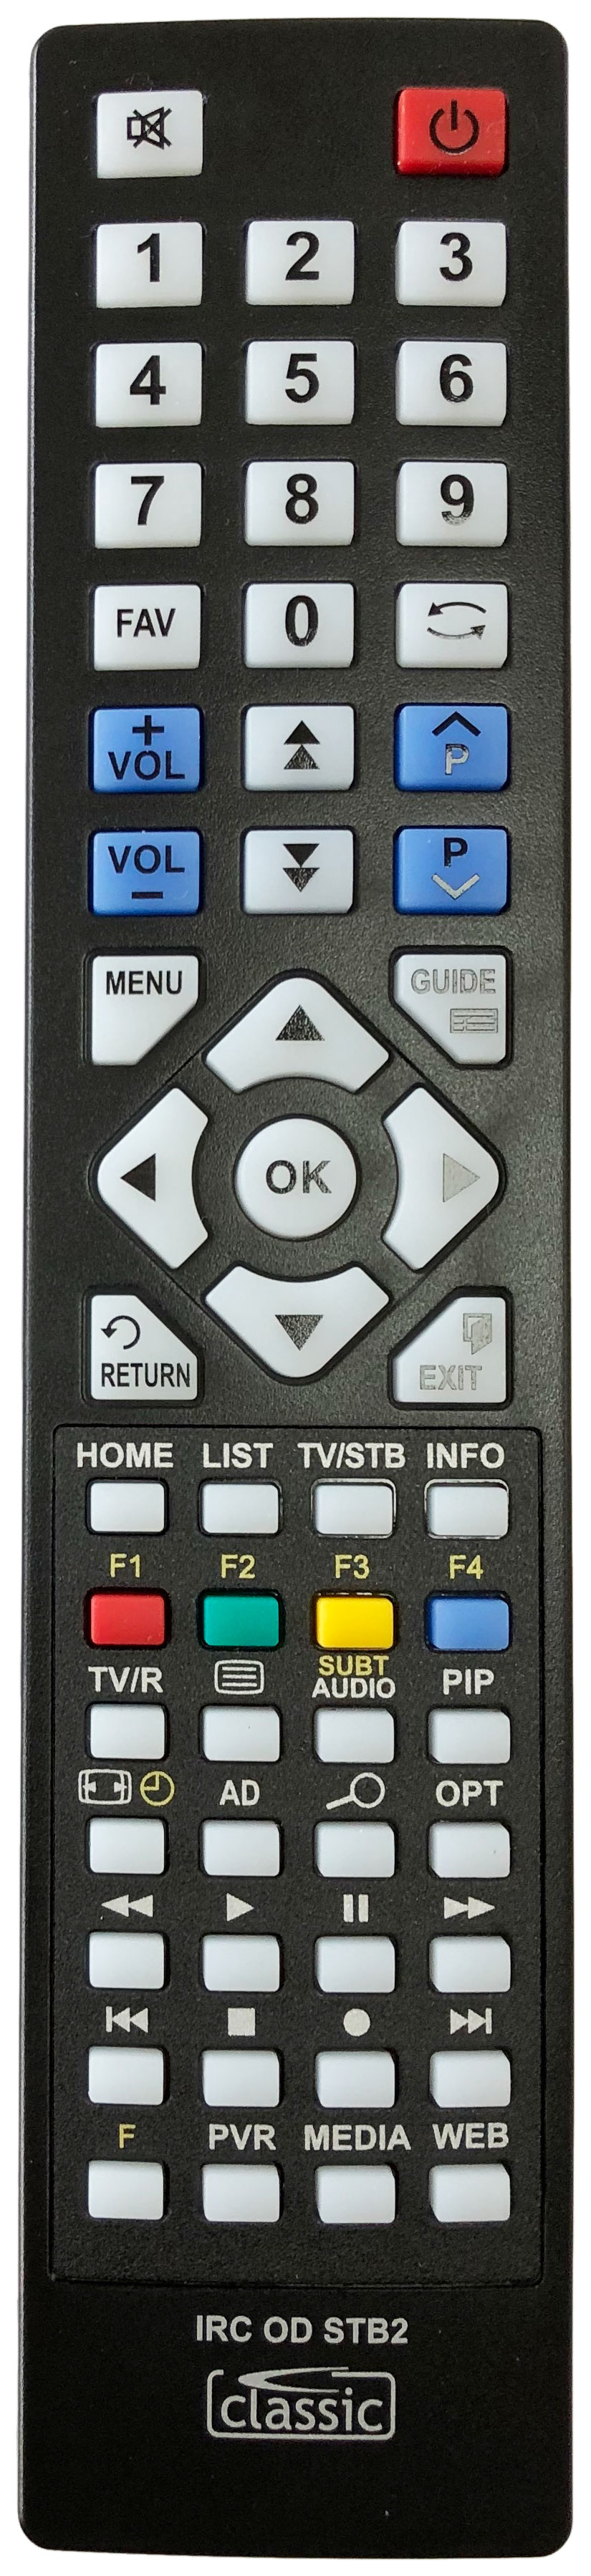 BUSH DVB262 Remote Control Alternative 